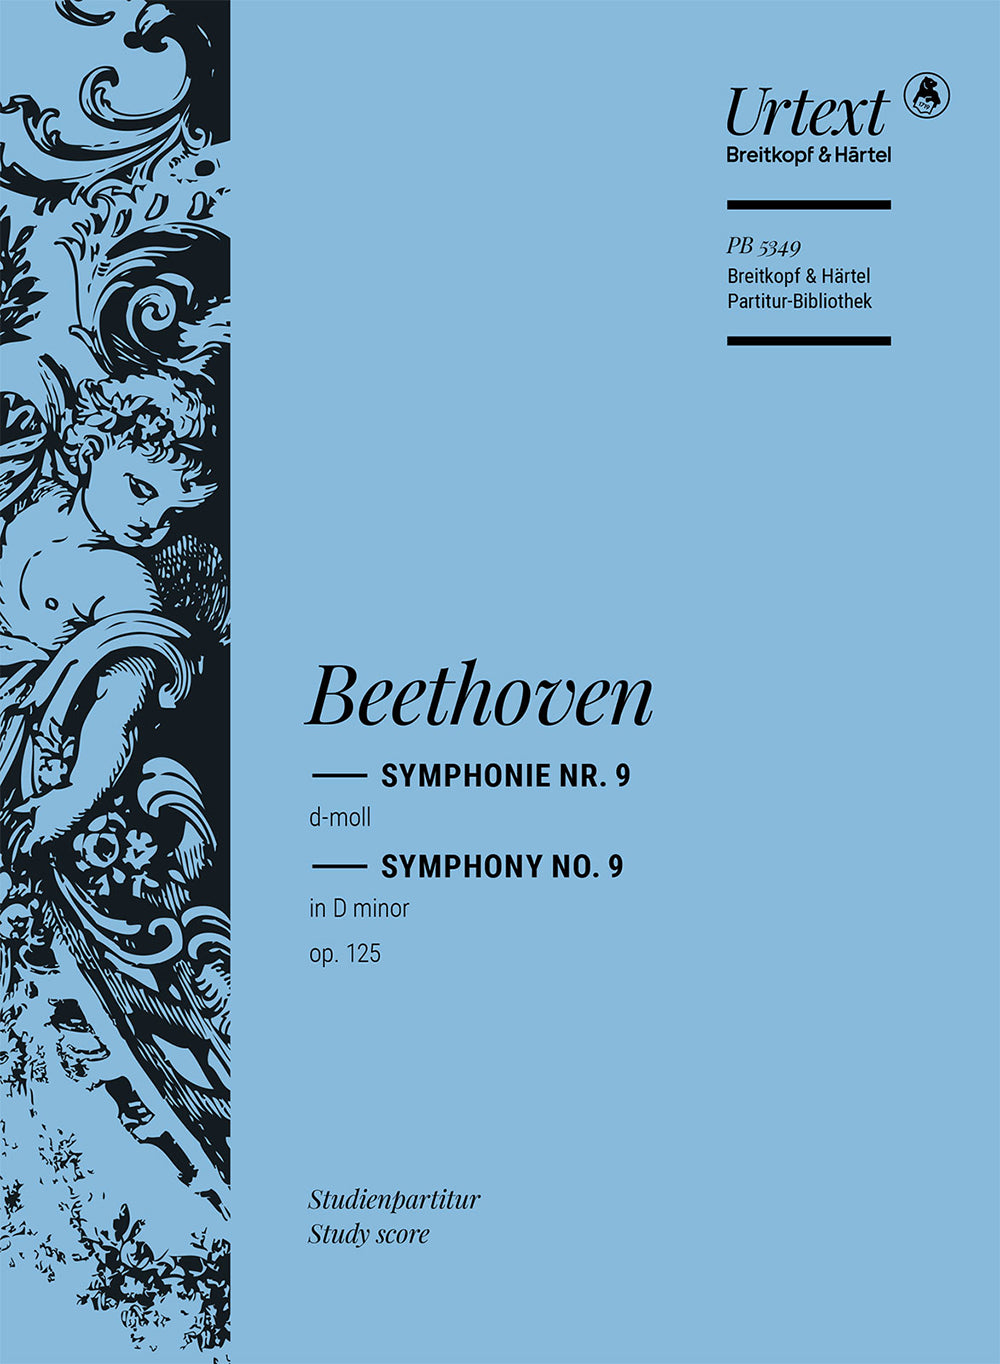 Beethoven Symphony No. 9 in D minor Op. 125 study score